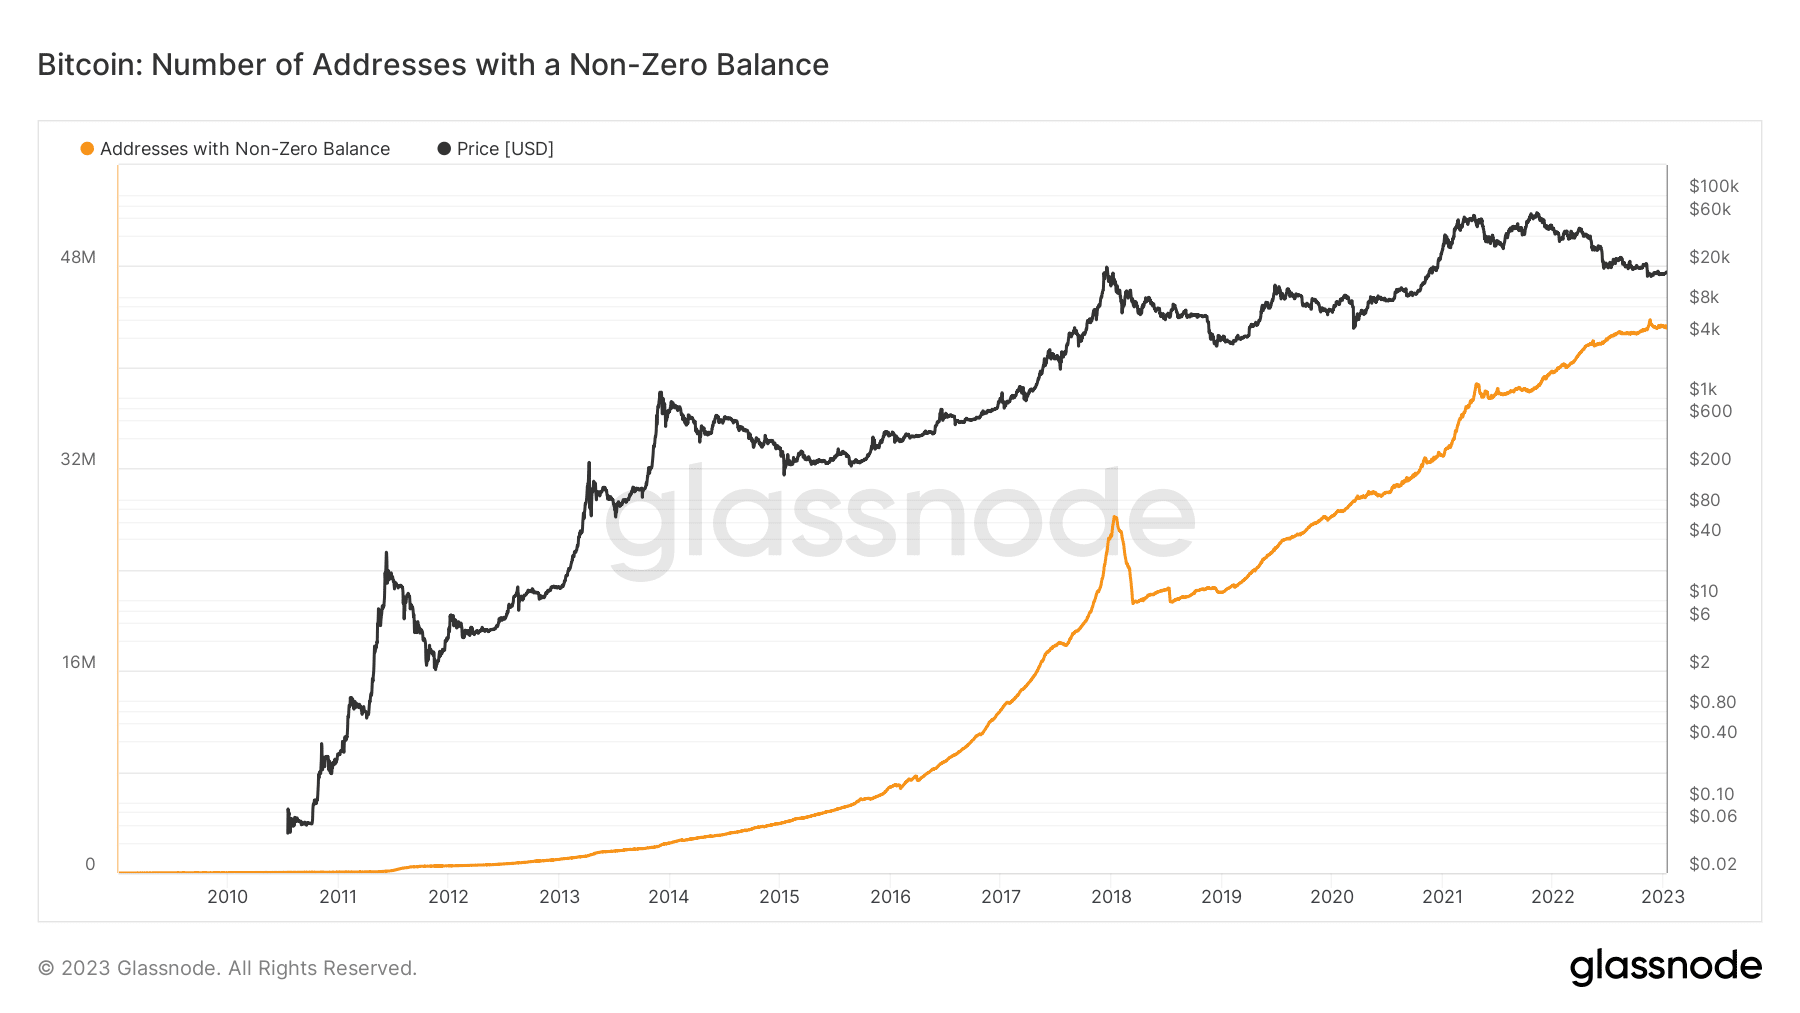 Bitcoin addresses with non-zero balance